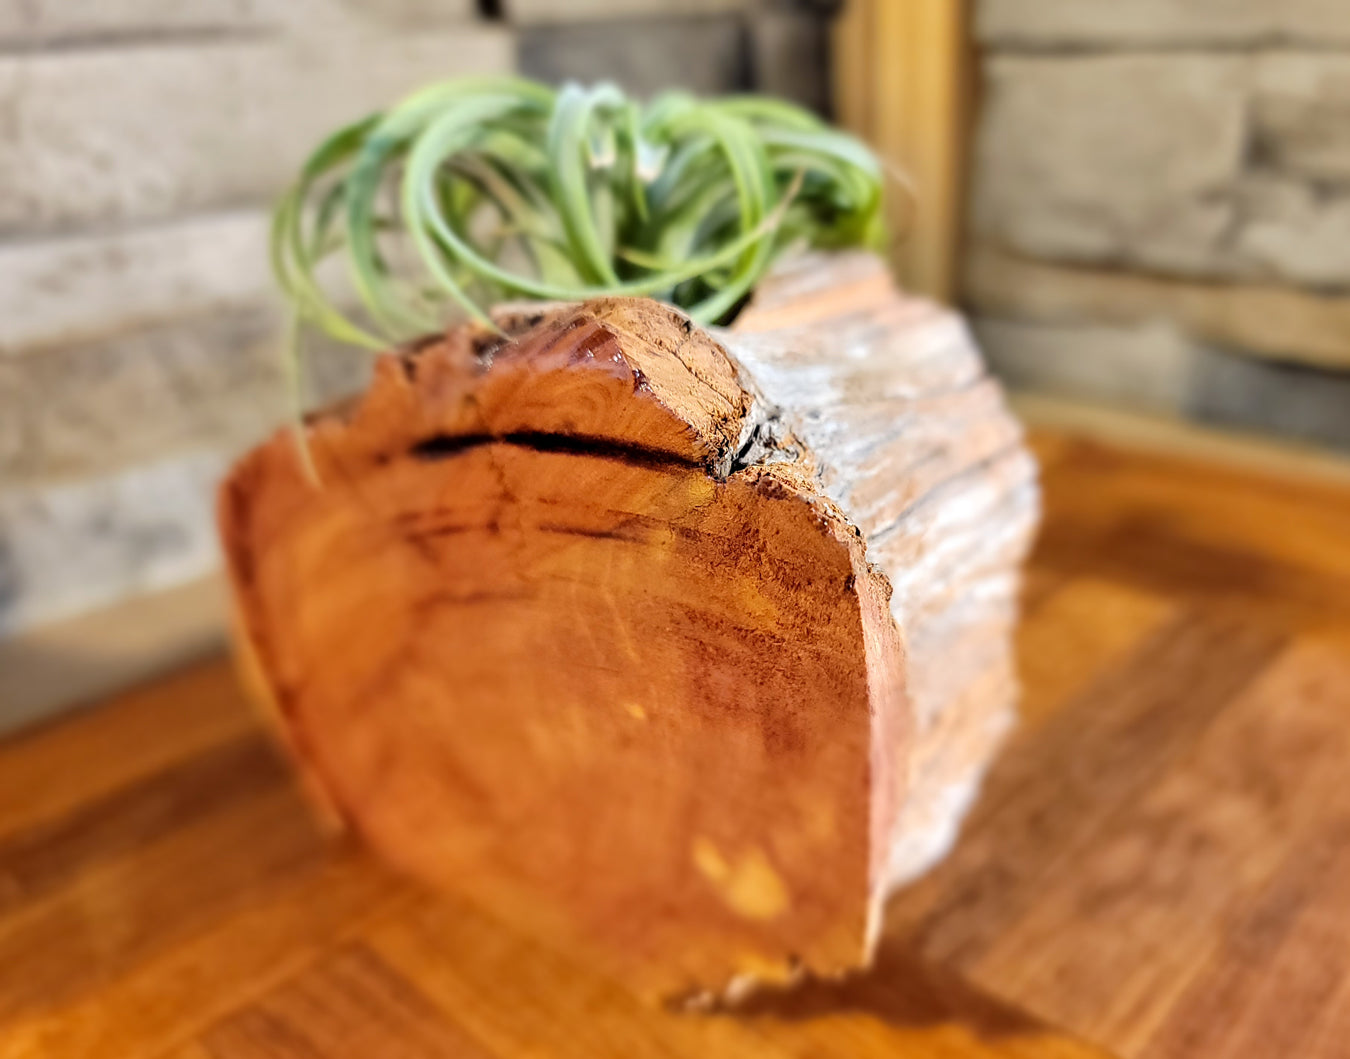 Organic Cedar Planter with Thriving Greenery, Focus